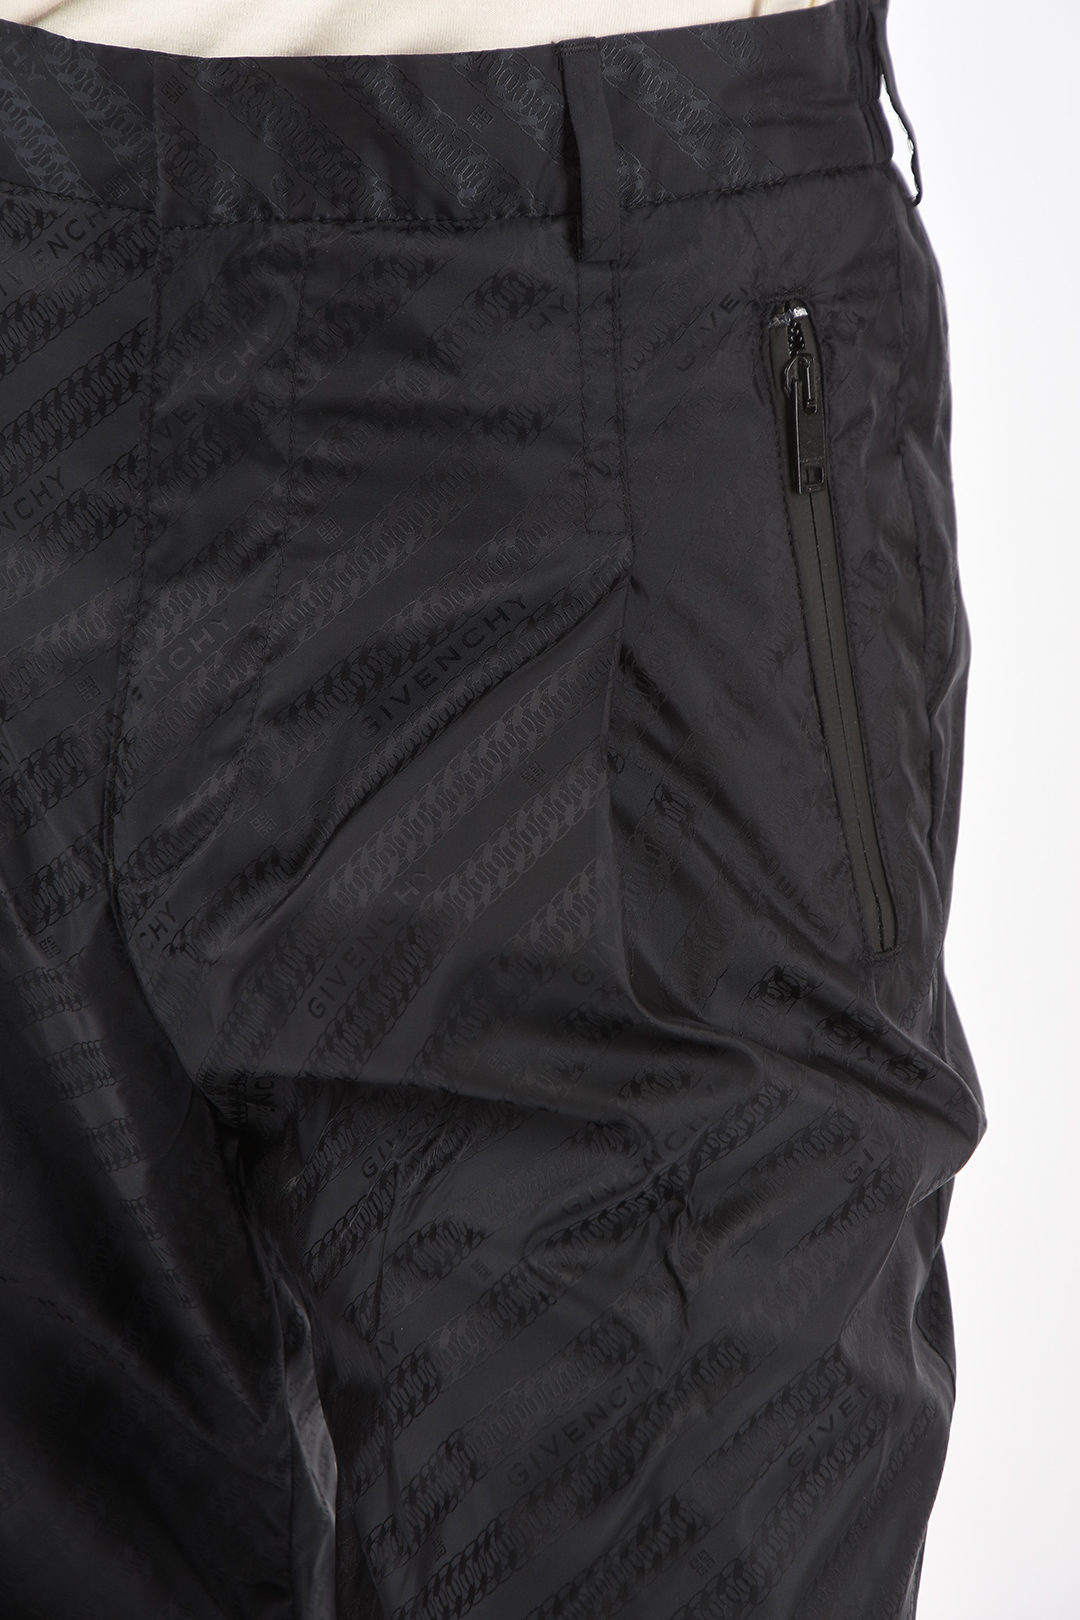 Louis Vuitton Track Pants & Joggers for Women - Poshmark